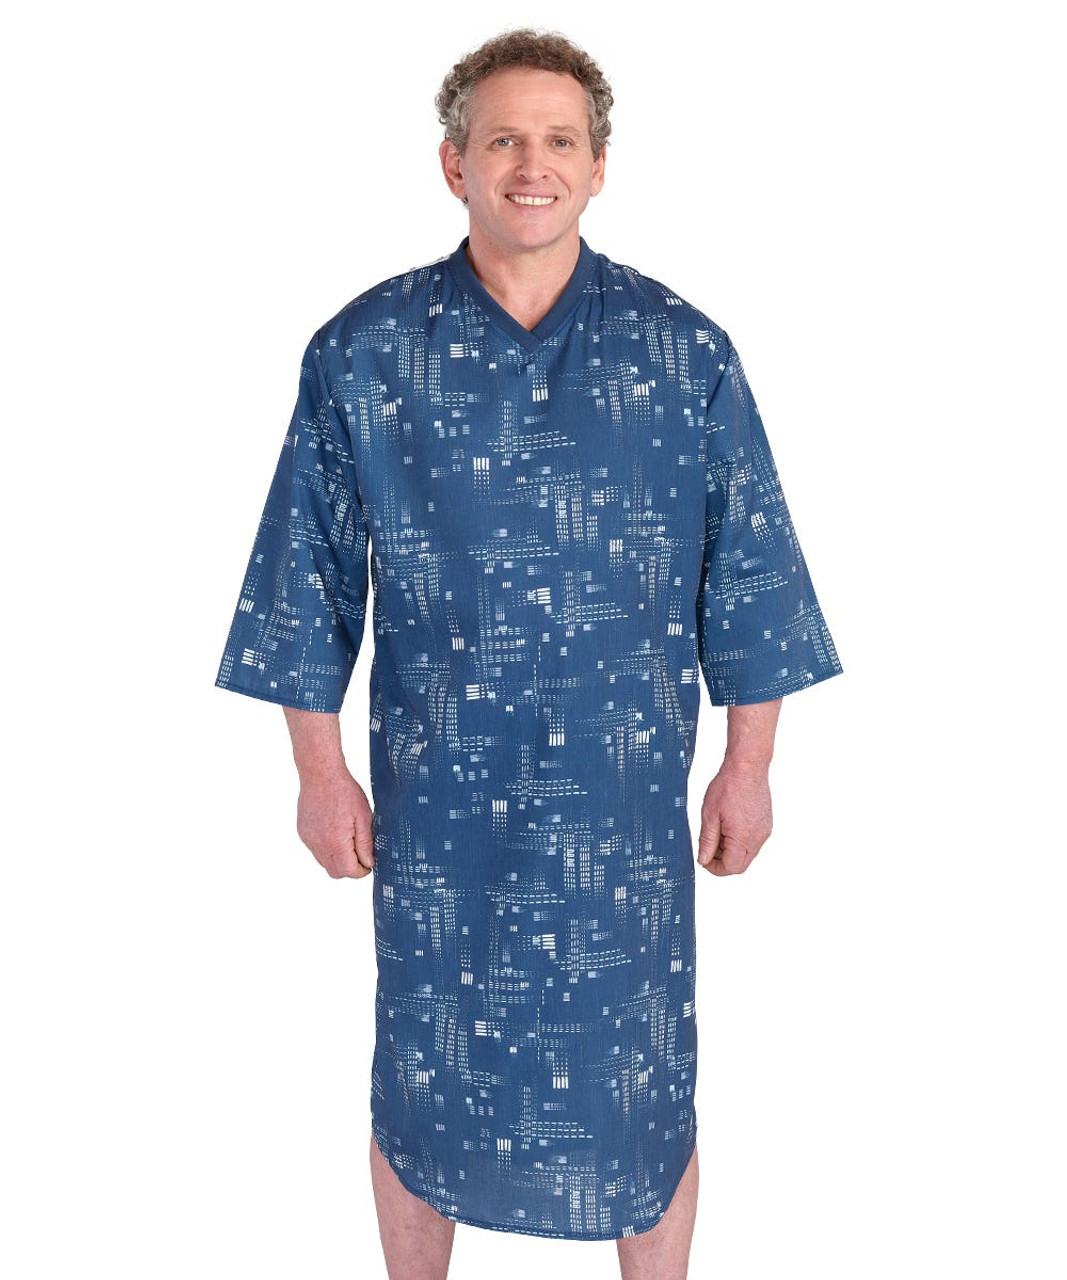 Silverts SV50050 Poly-Cotton Hospital Gowns for Men Navy/Gray, Size=M, SV50050-SV1372-M